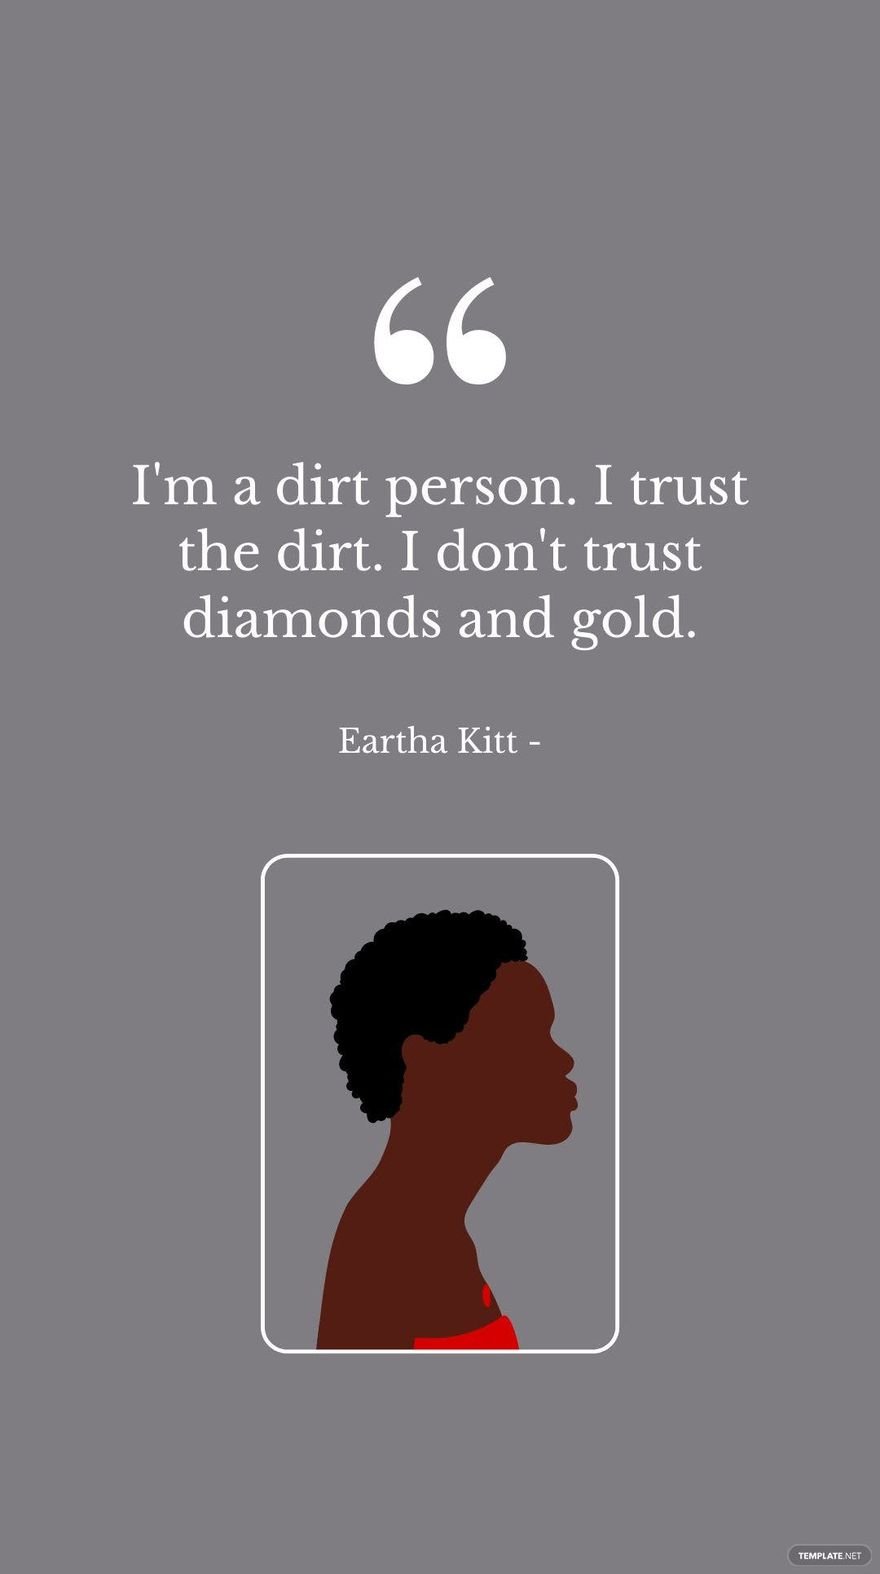 Eartha Kitt - I'm a dirt person. I trust the dirt. I don't trust diamonds and gold.